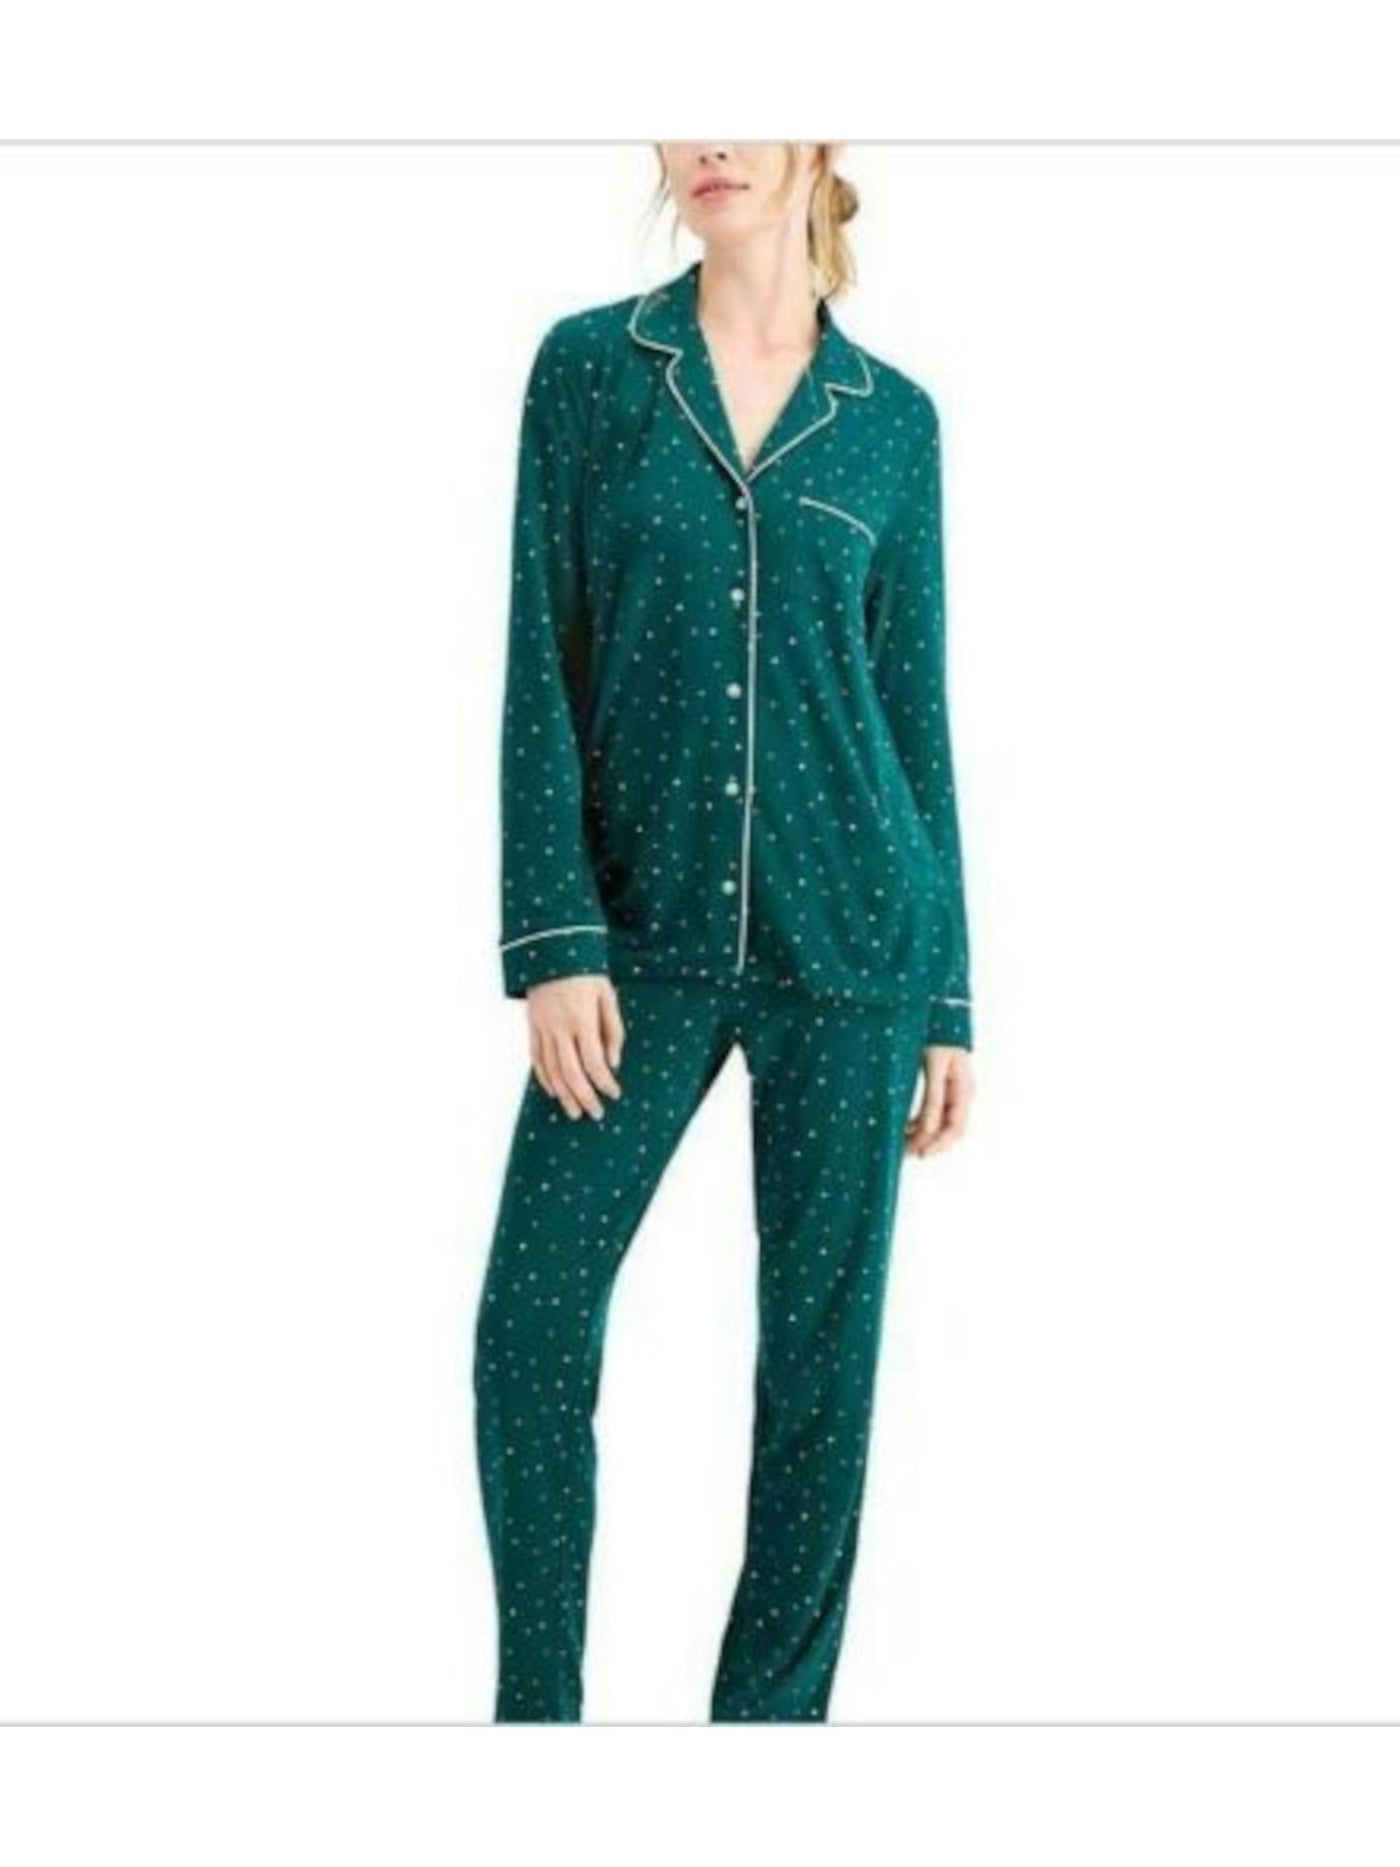 ALFANI INTIMATES Intimates Green Chest Pocket Notch Collar Piping Trim Polka Dot Sleep Shirt Pajama Top M